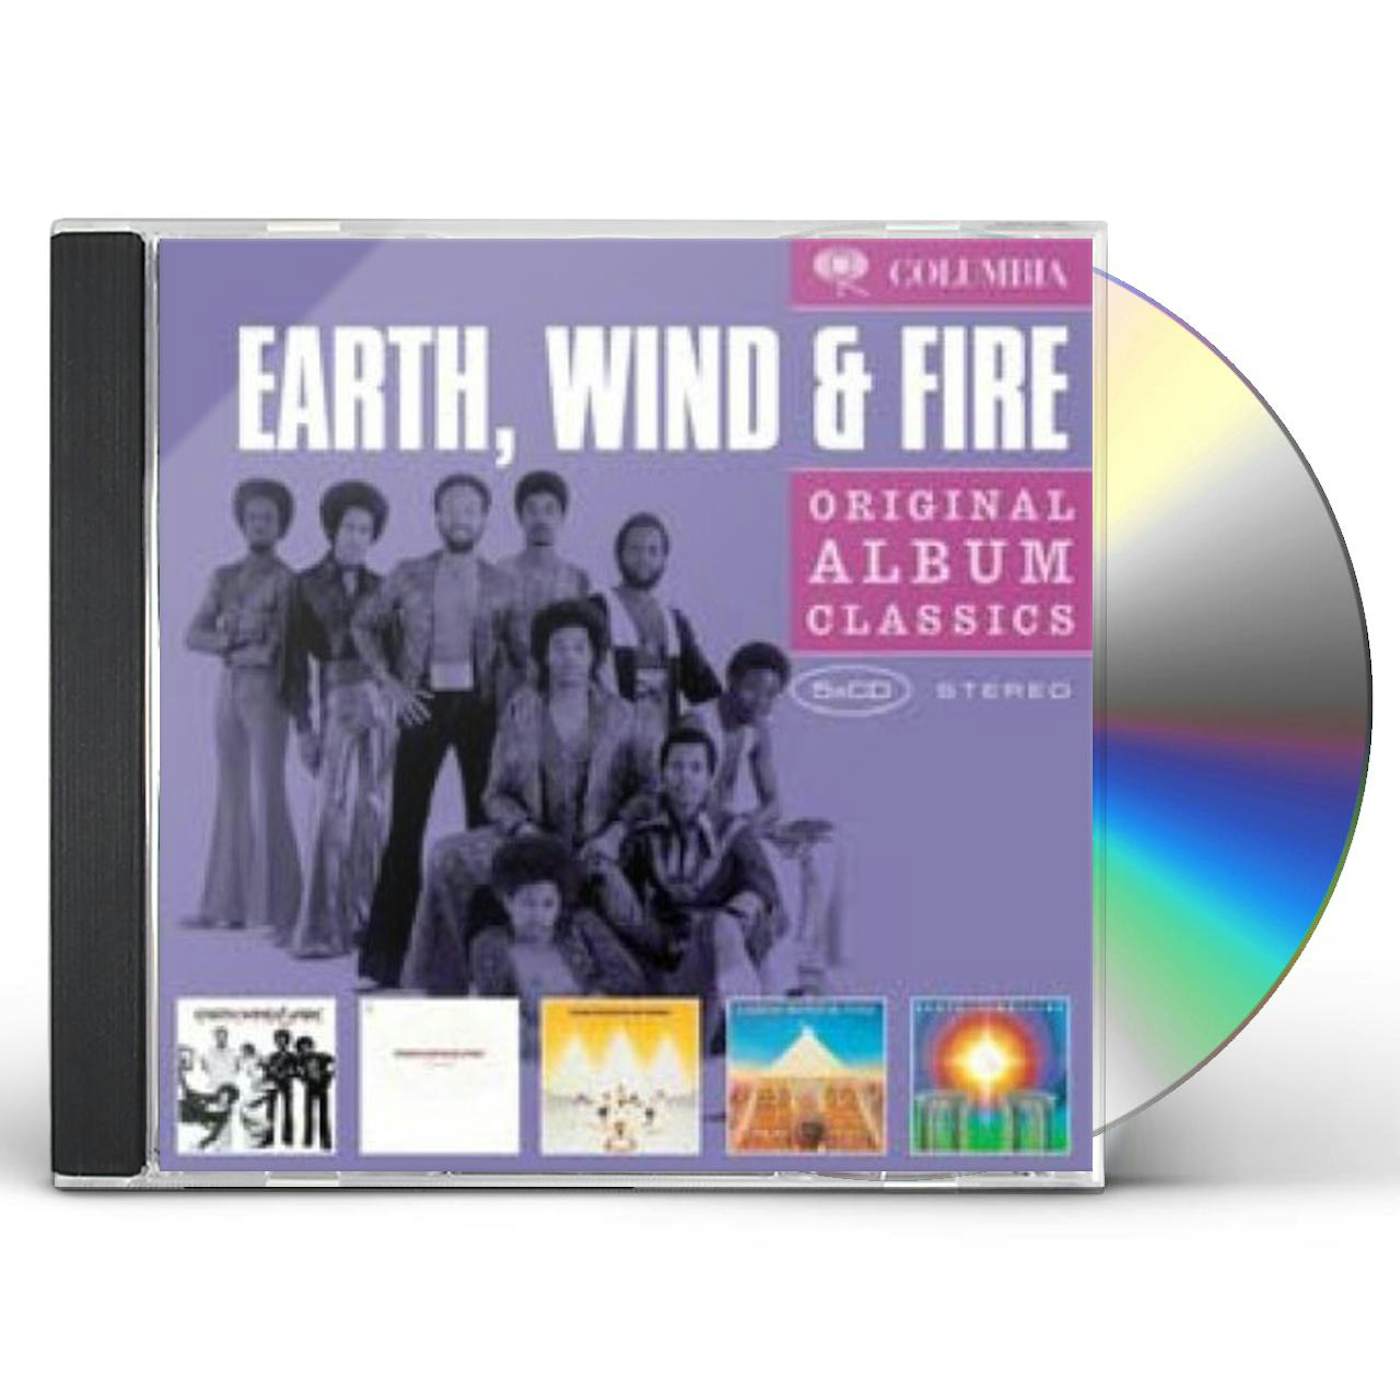 Earth, Wind & Fire ORIGINAL ALBUM CLASSICS CD